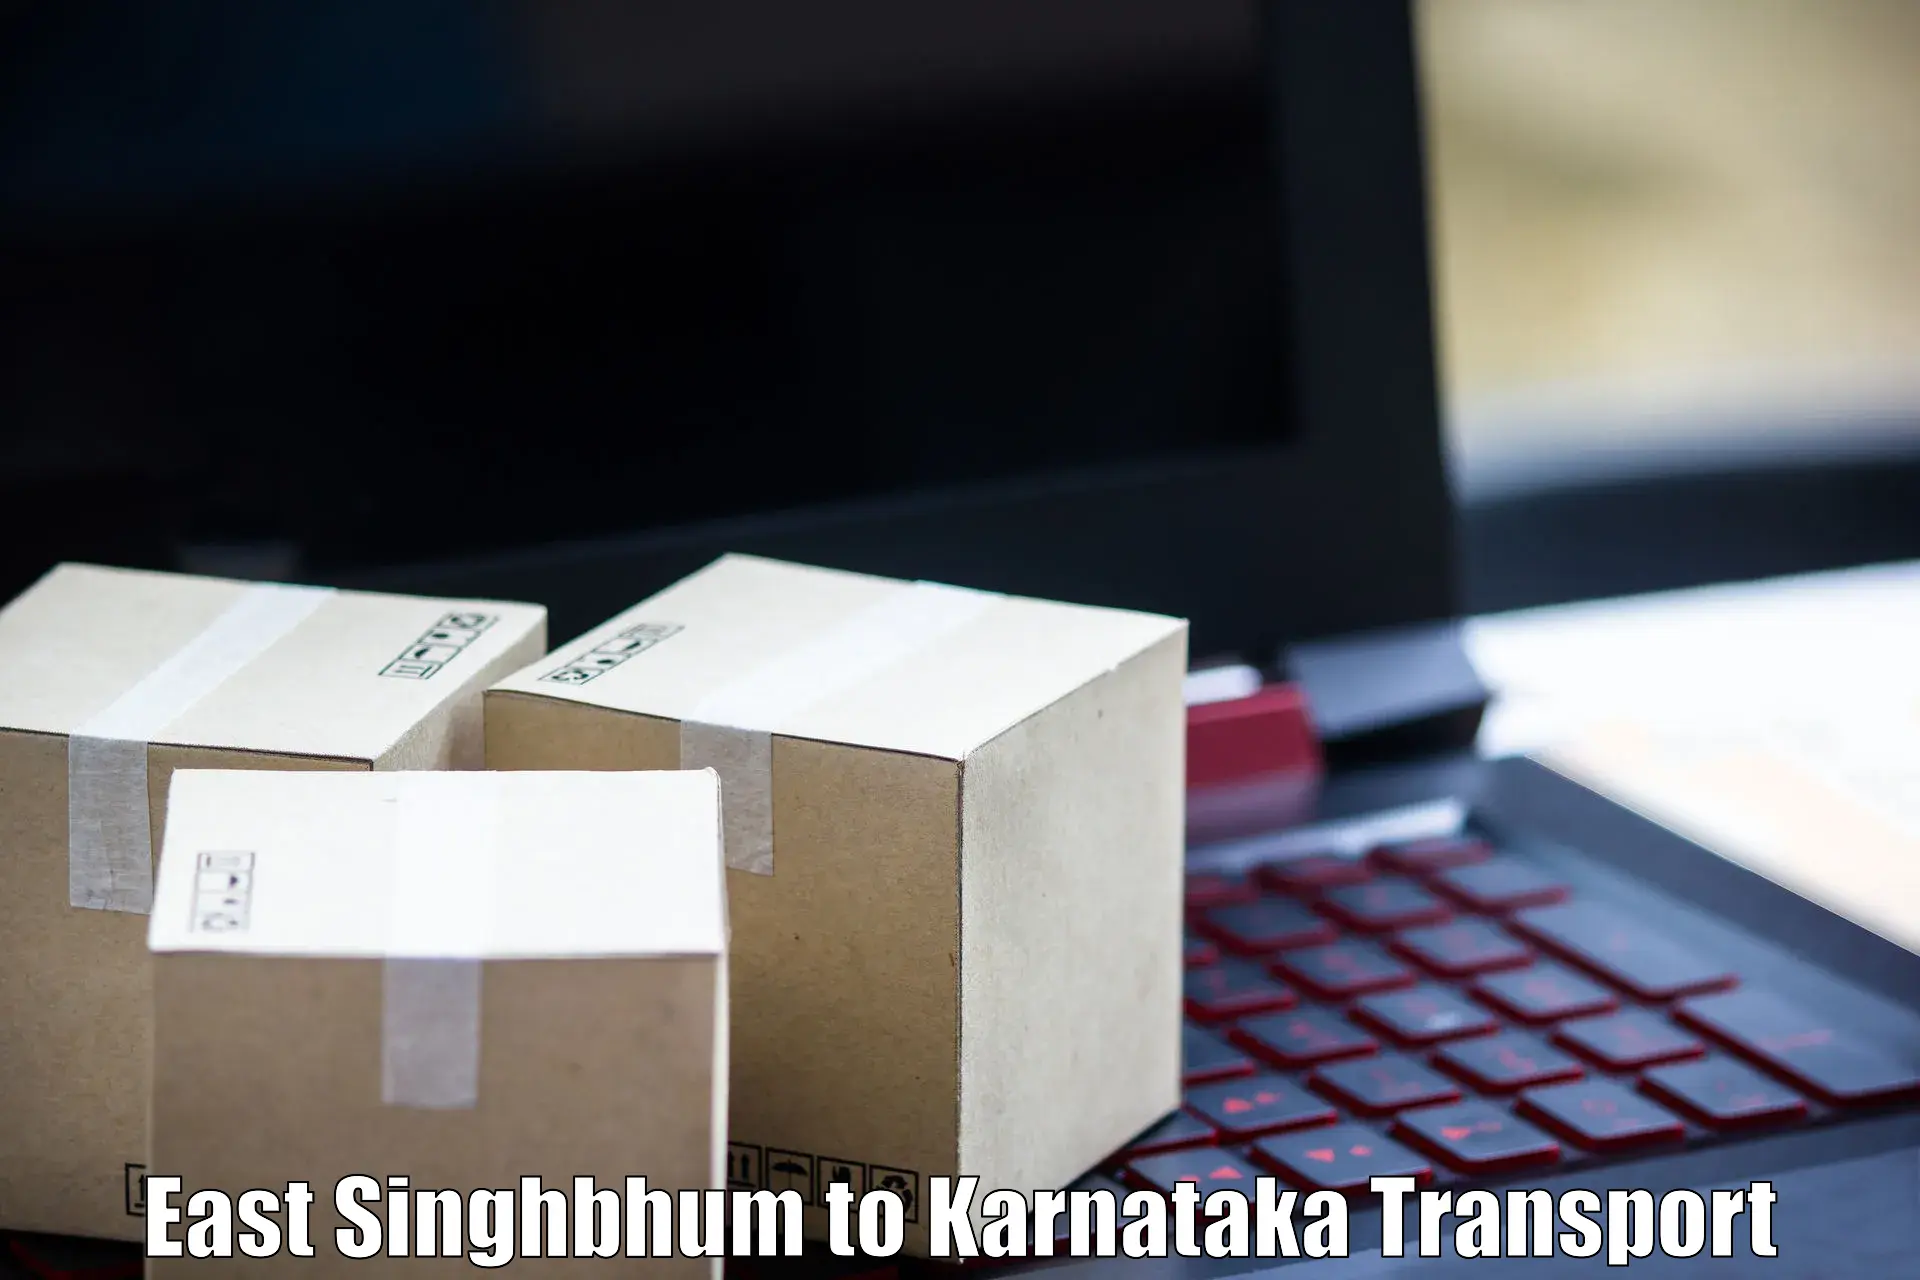 Online transport service East Singhbhum to Kanjarakatte